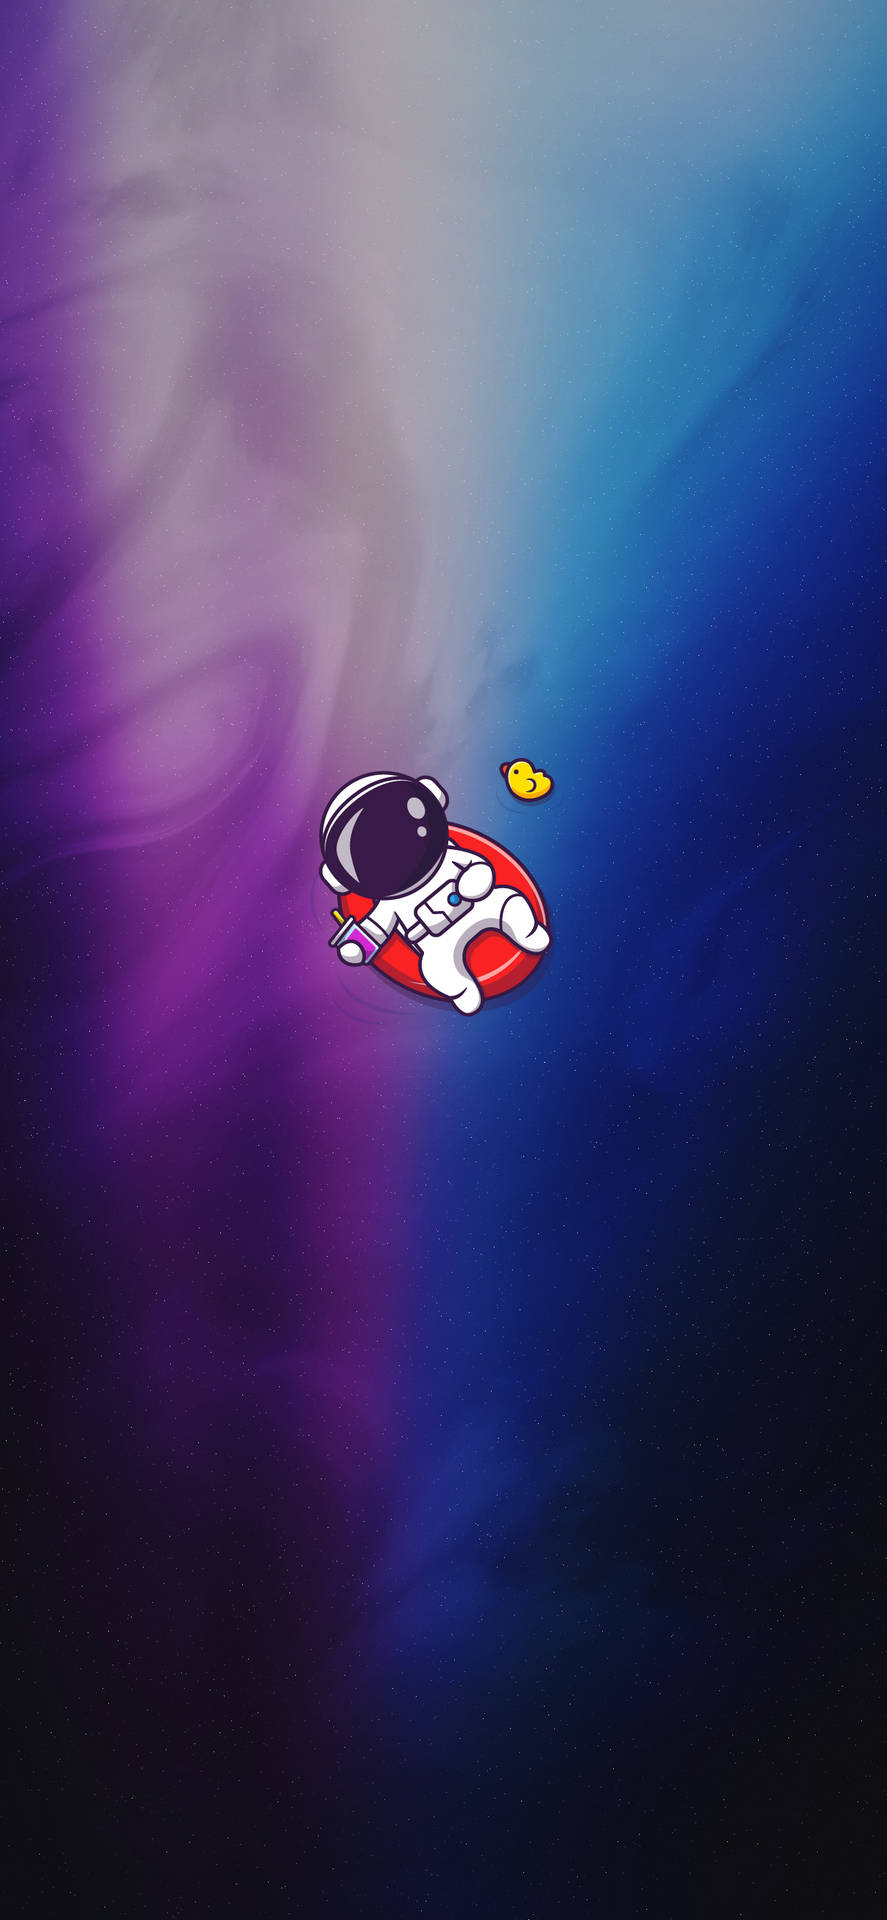 Cartoon Astronaut On A Life Preserver Background